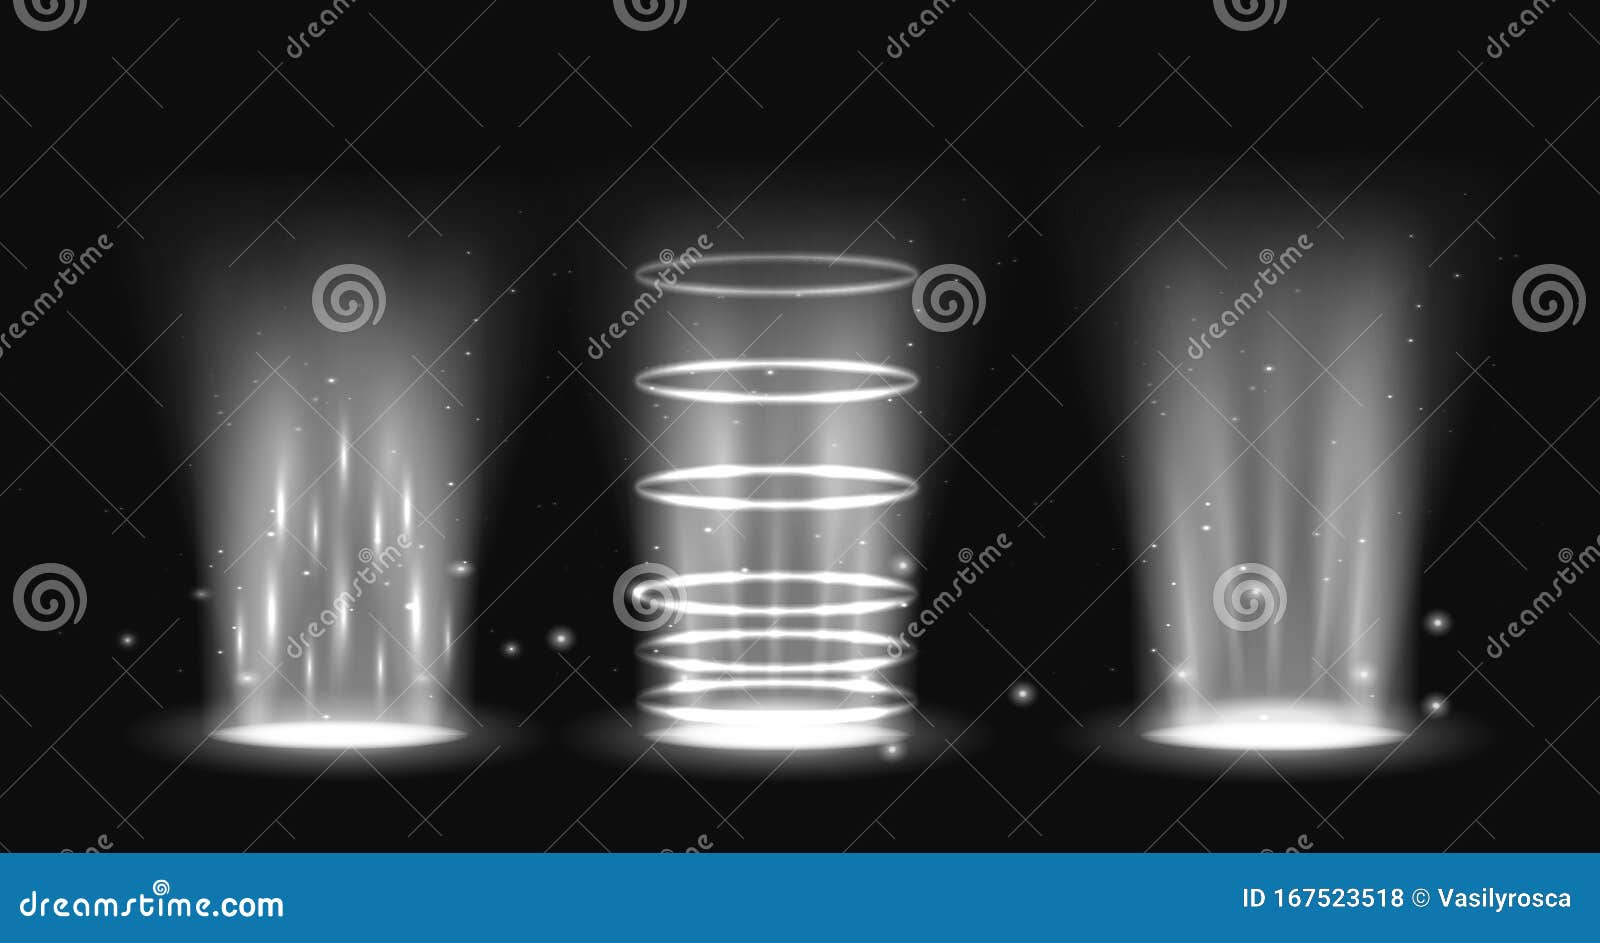 portal set light effect hologram. magic circle teleport podium. ufo swirl beam and ray energy funnel